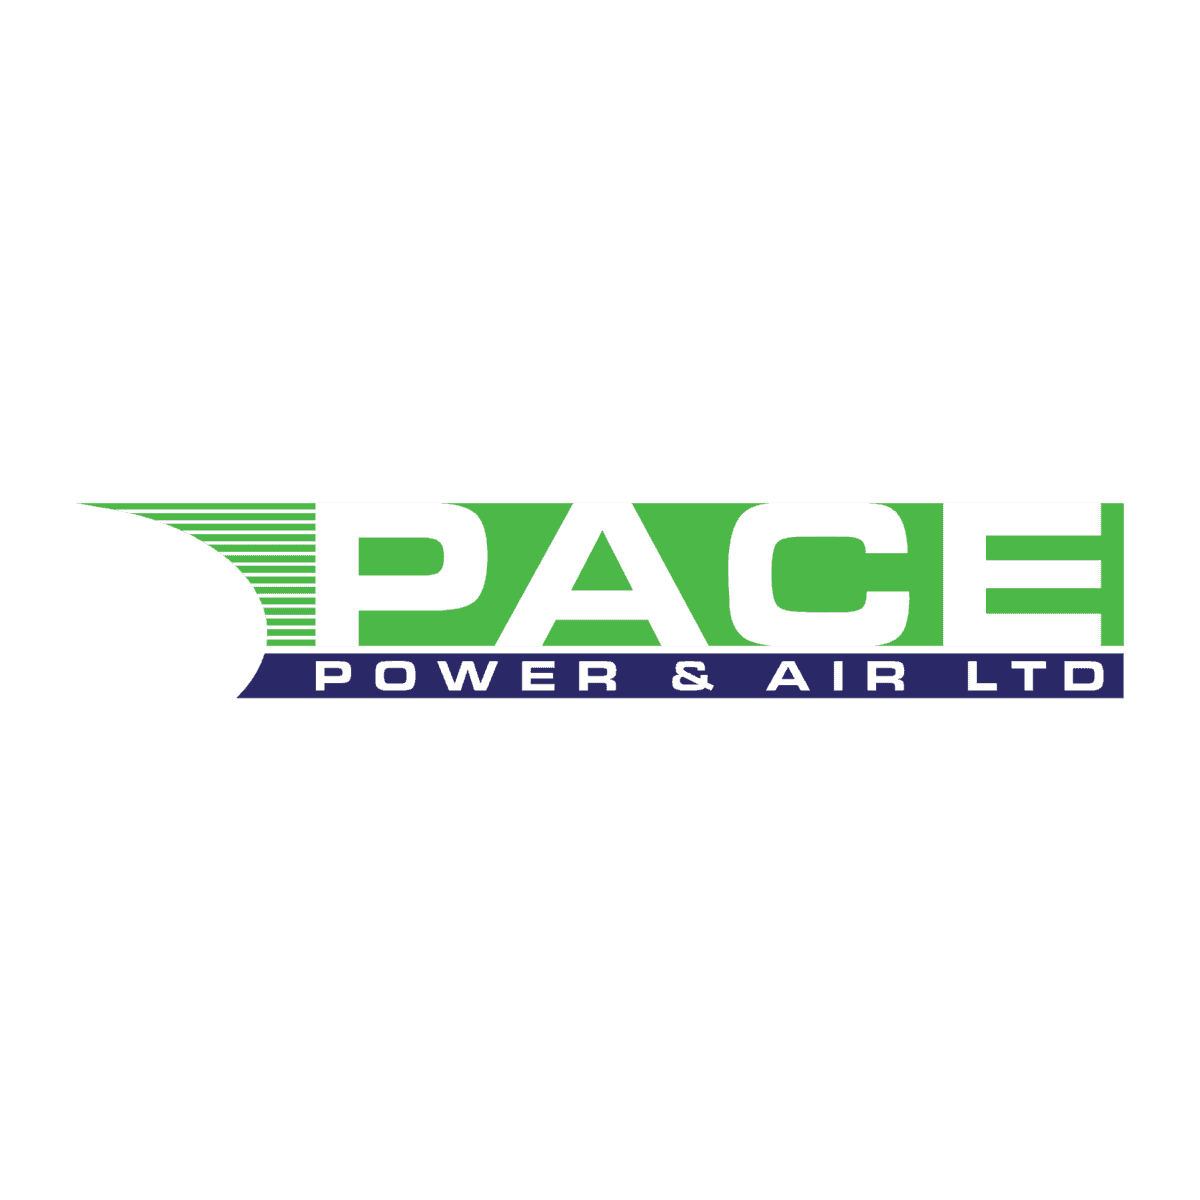 Pace Power and Air Ltd logo